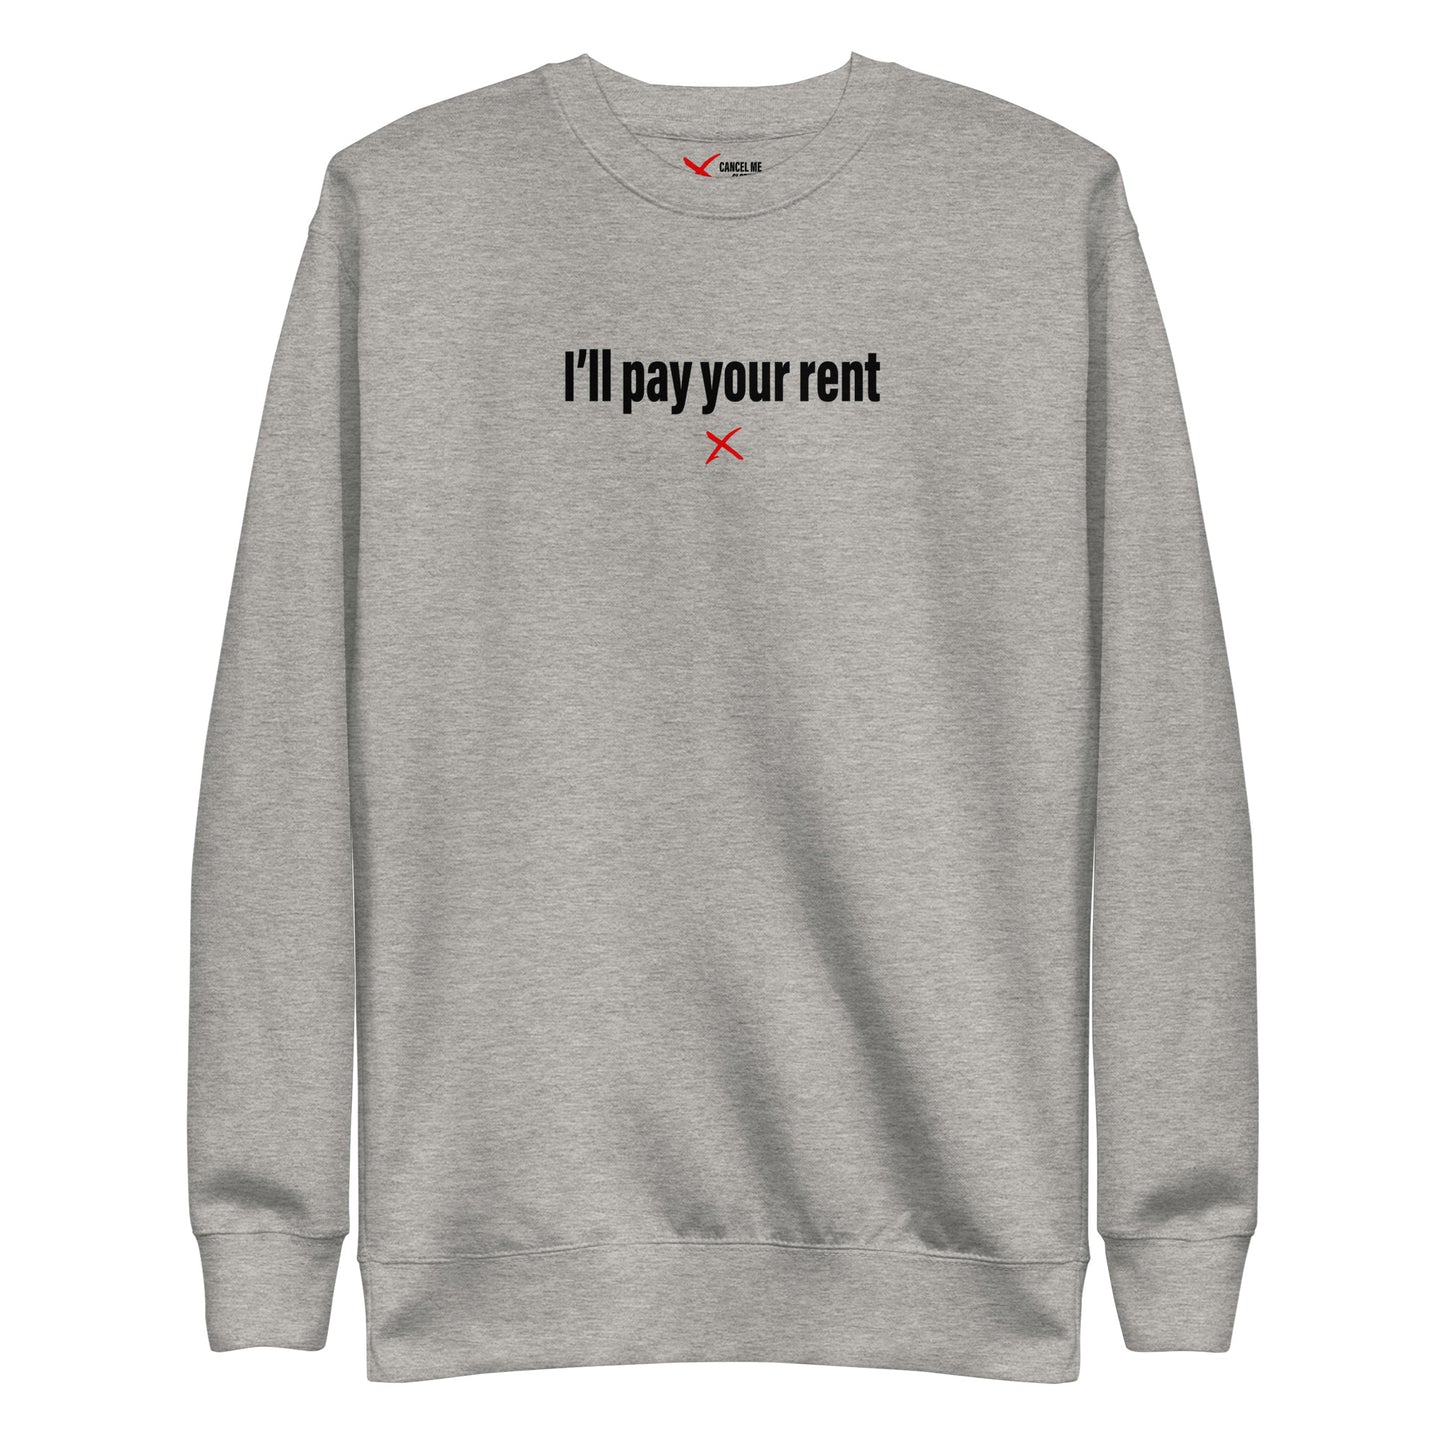 I'll pay your rent - Sweatshirt